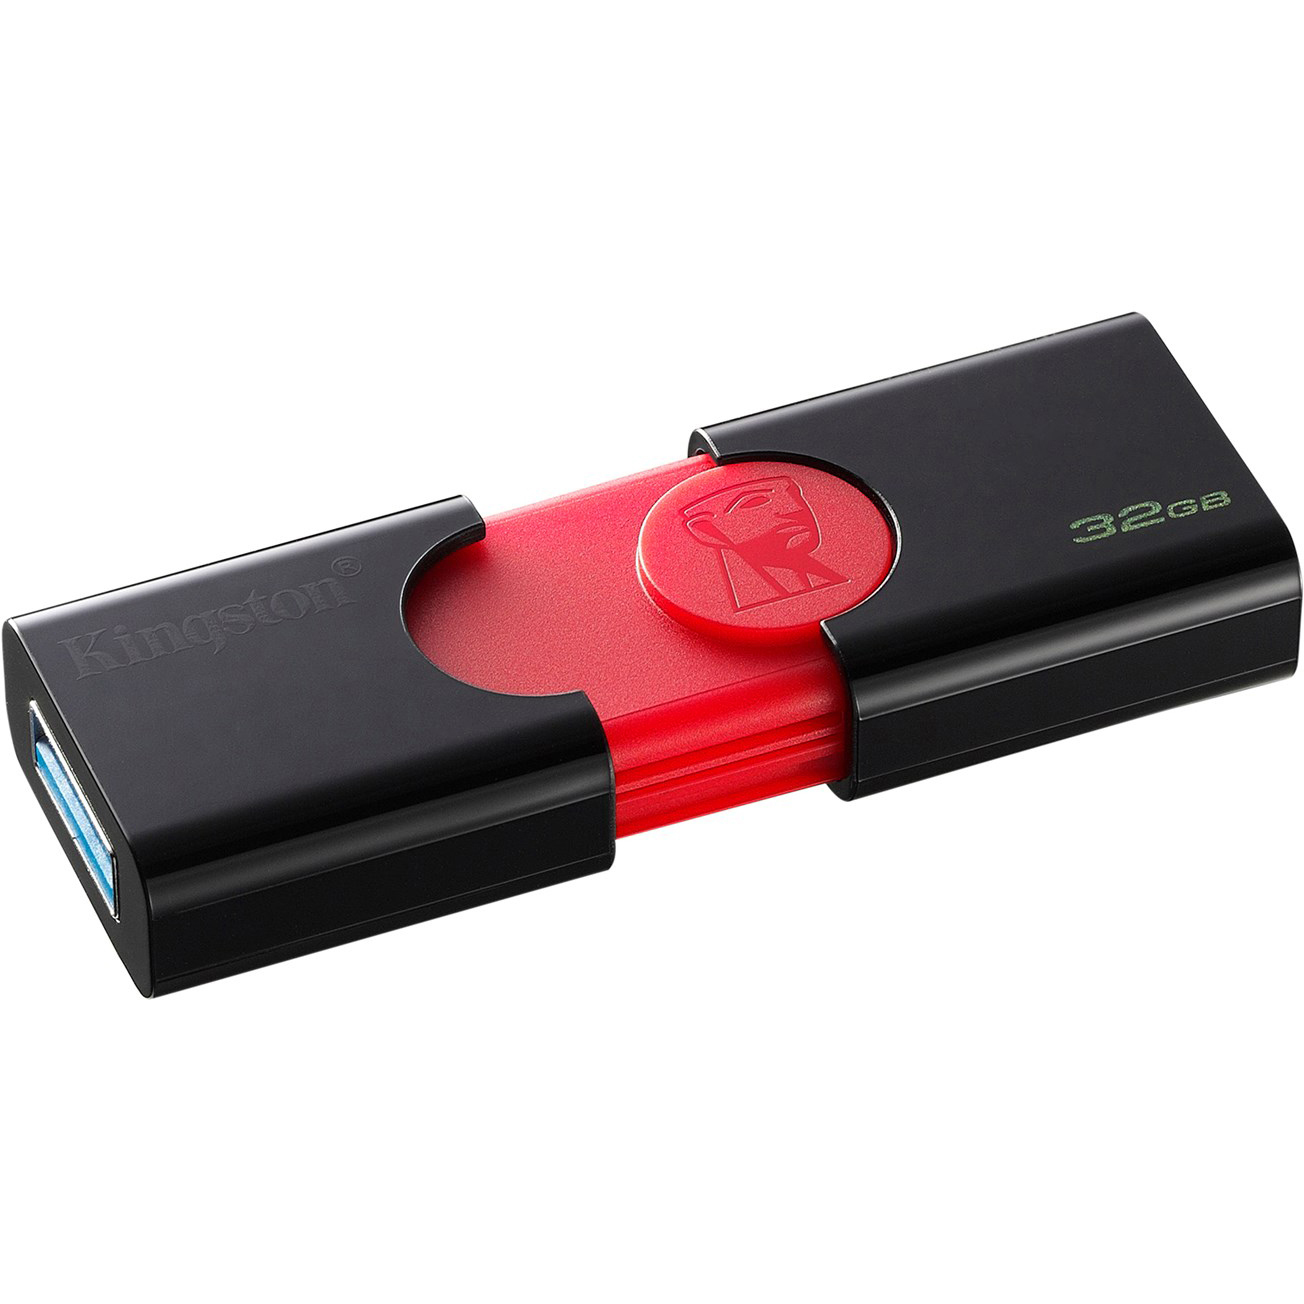 Original Kingston DataTraveler 106 32GB USB 3.0 Flash Drive (DT106/32GB)